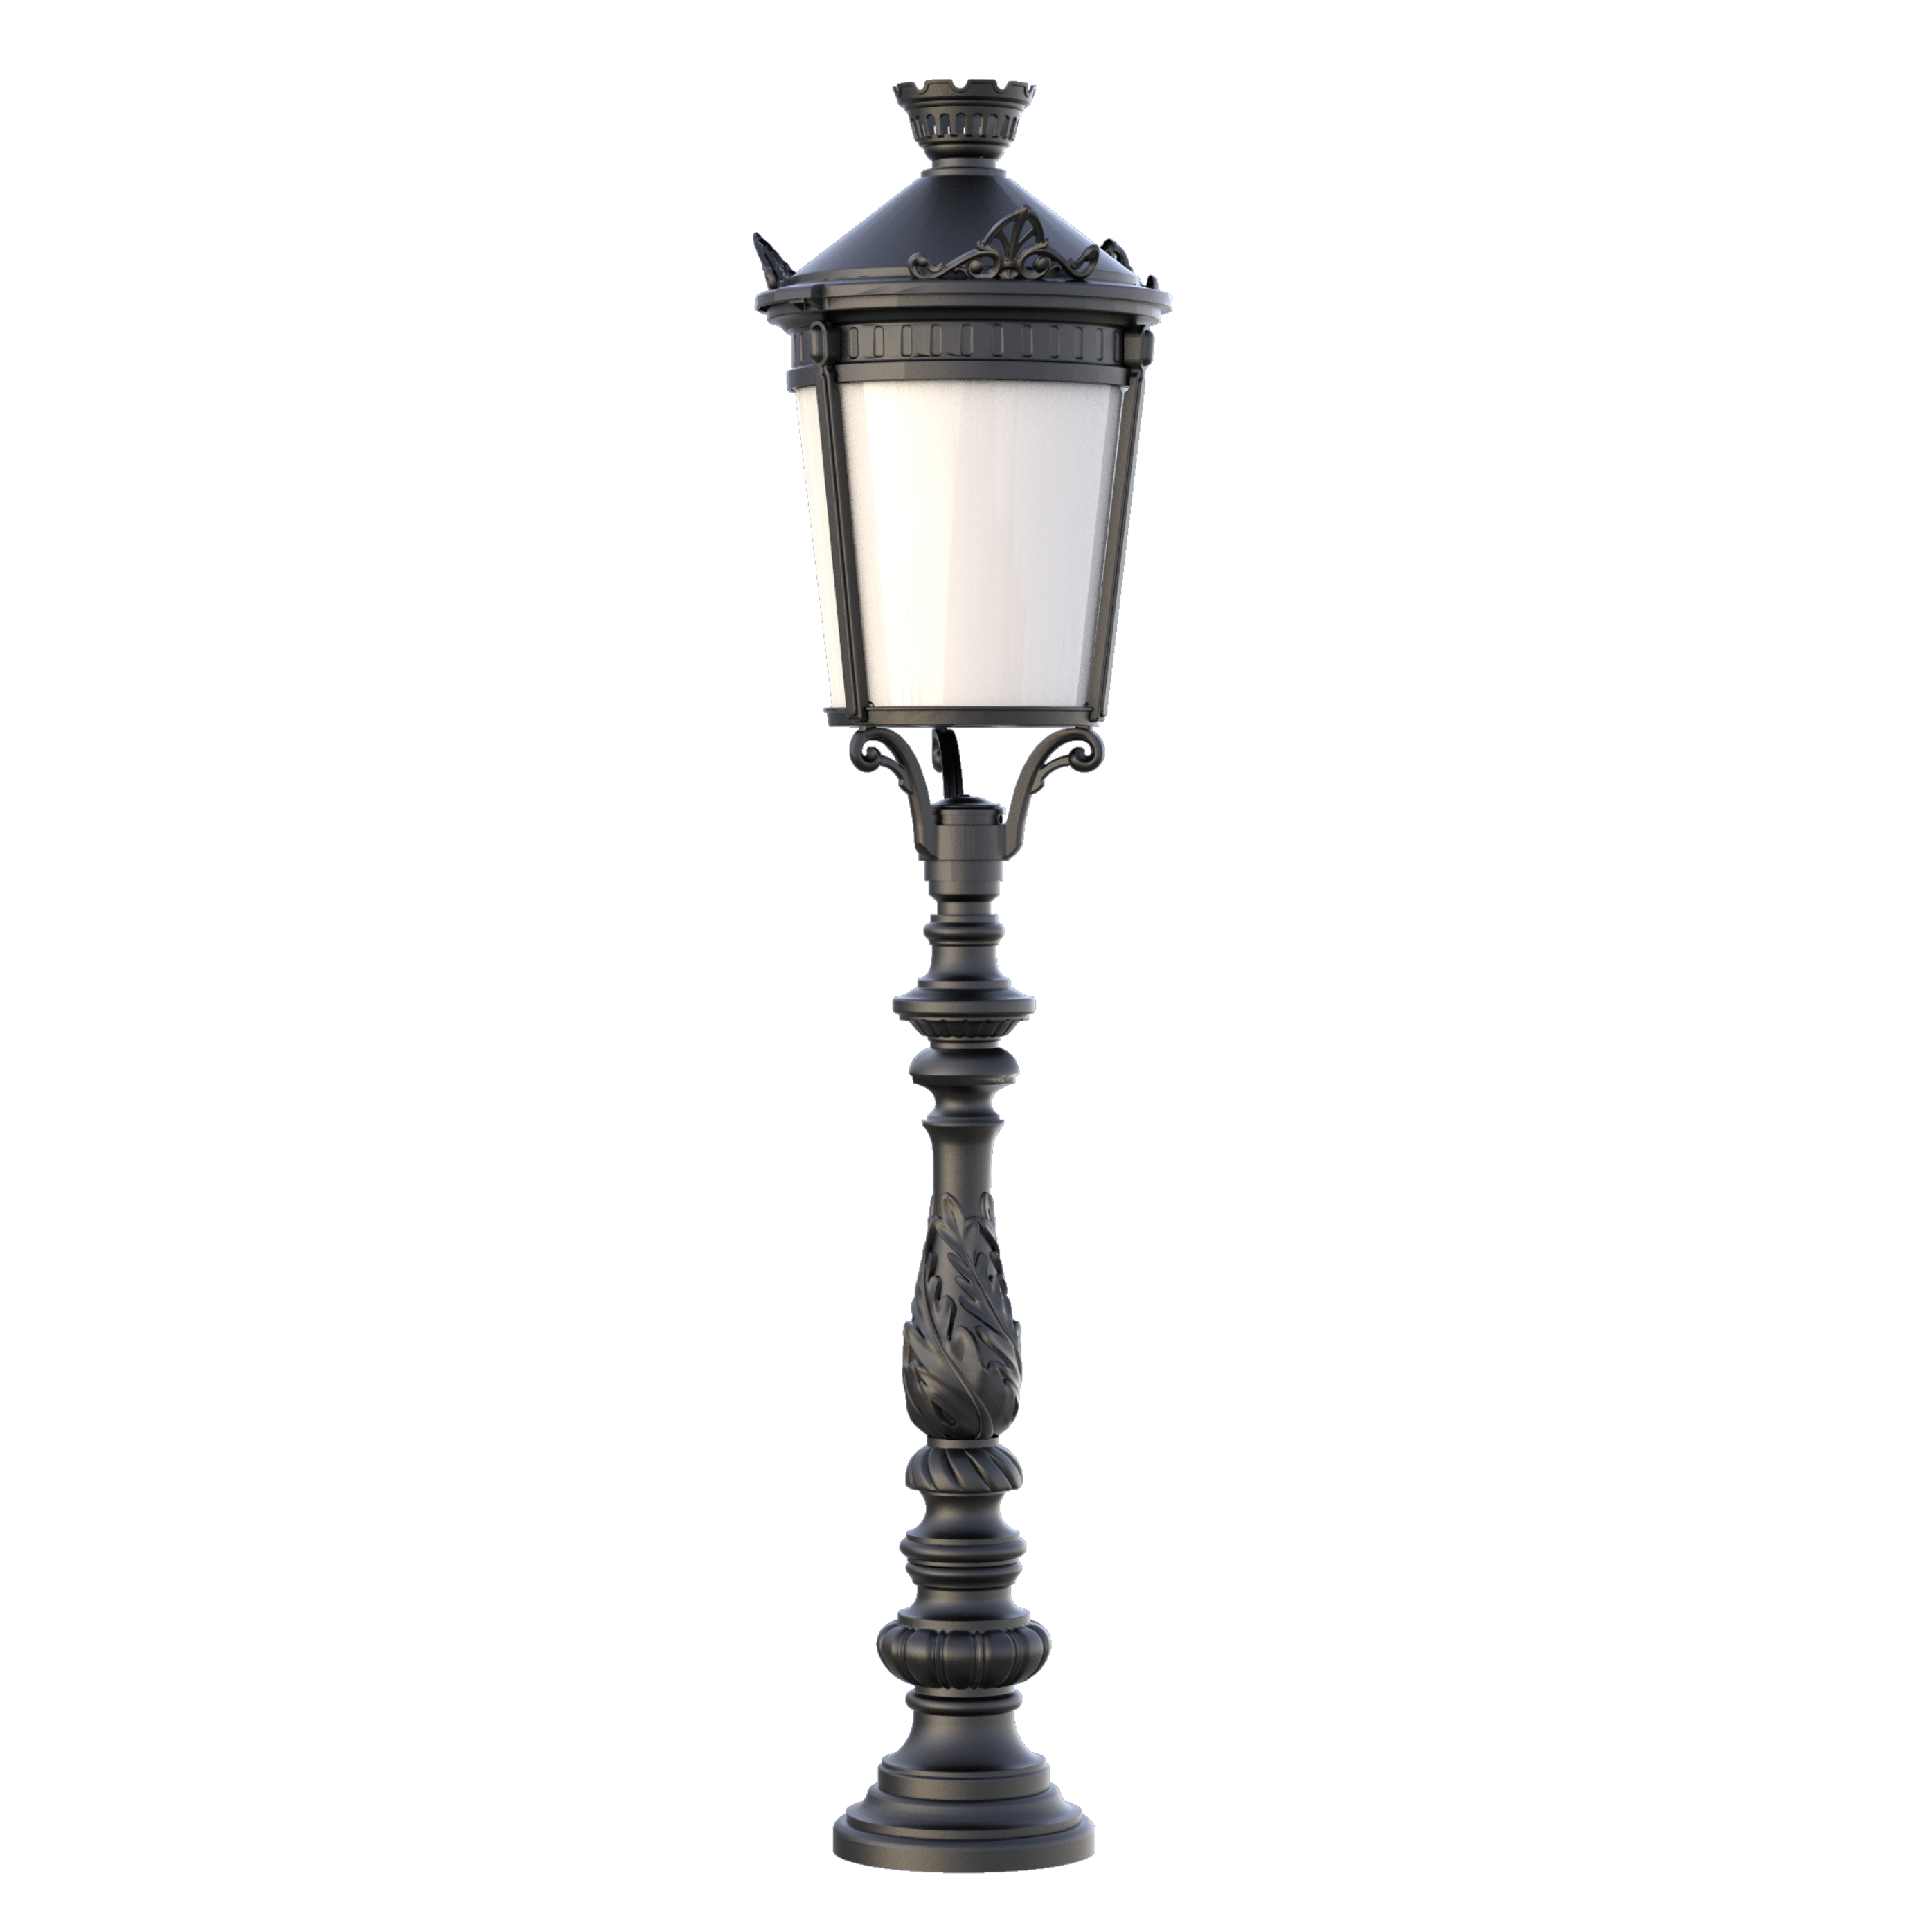 PALAZZOGLOW Lighting Pole, Ornamental Cast Iron Park Lantern on Decorative Pole